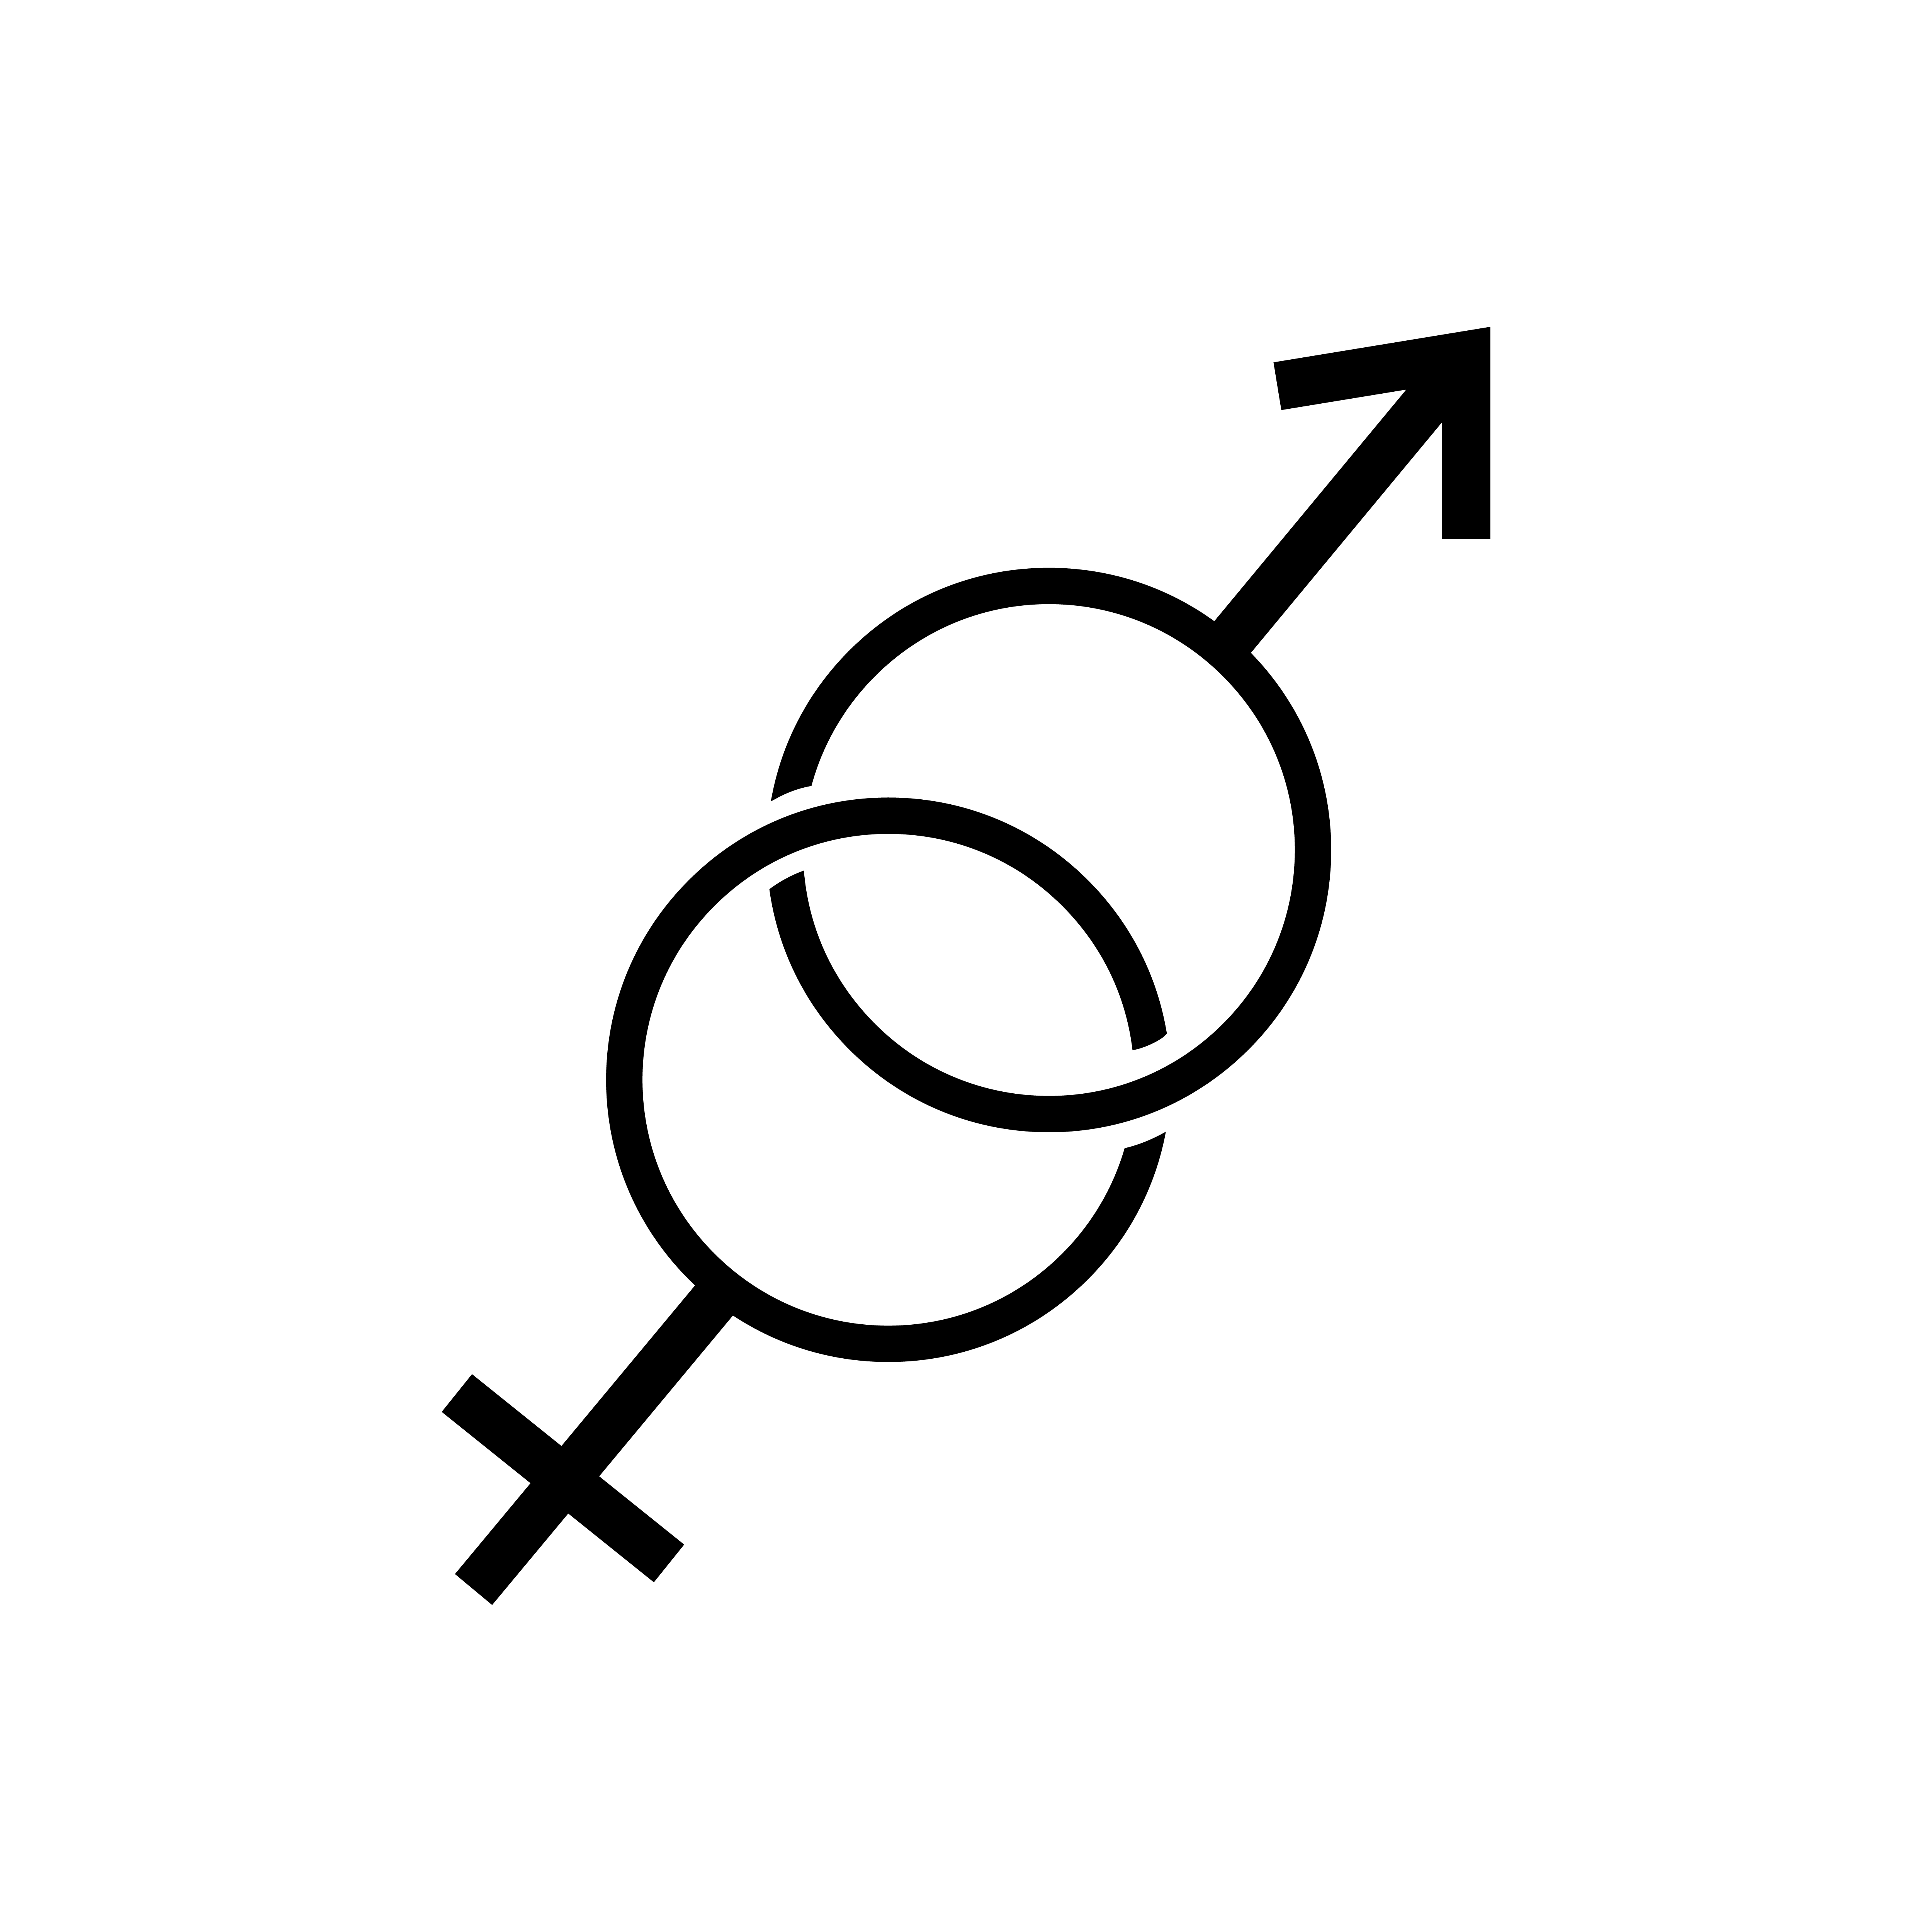 Male Female Symbol Free Vector Art - (62333 Free Downloads)